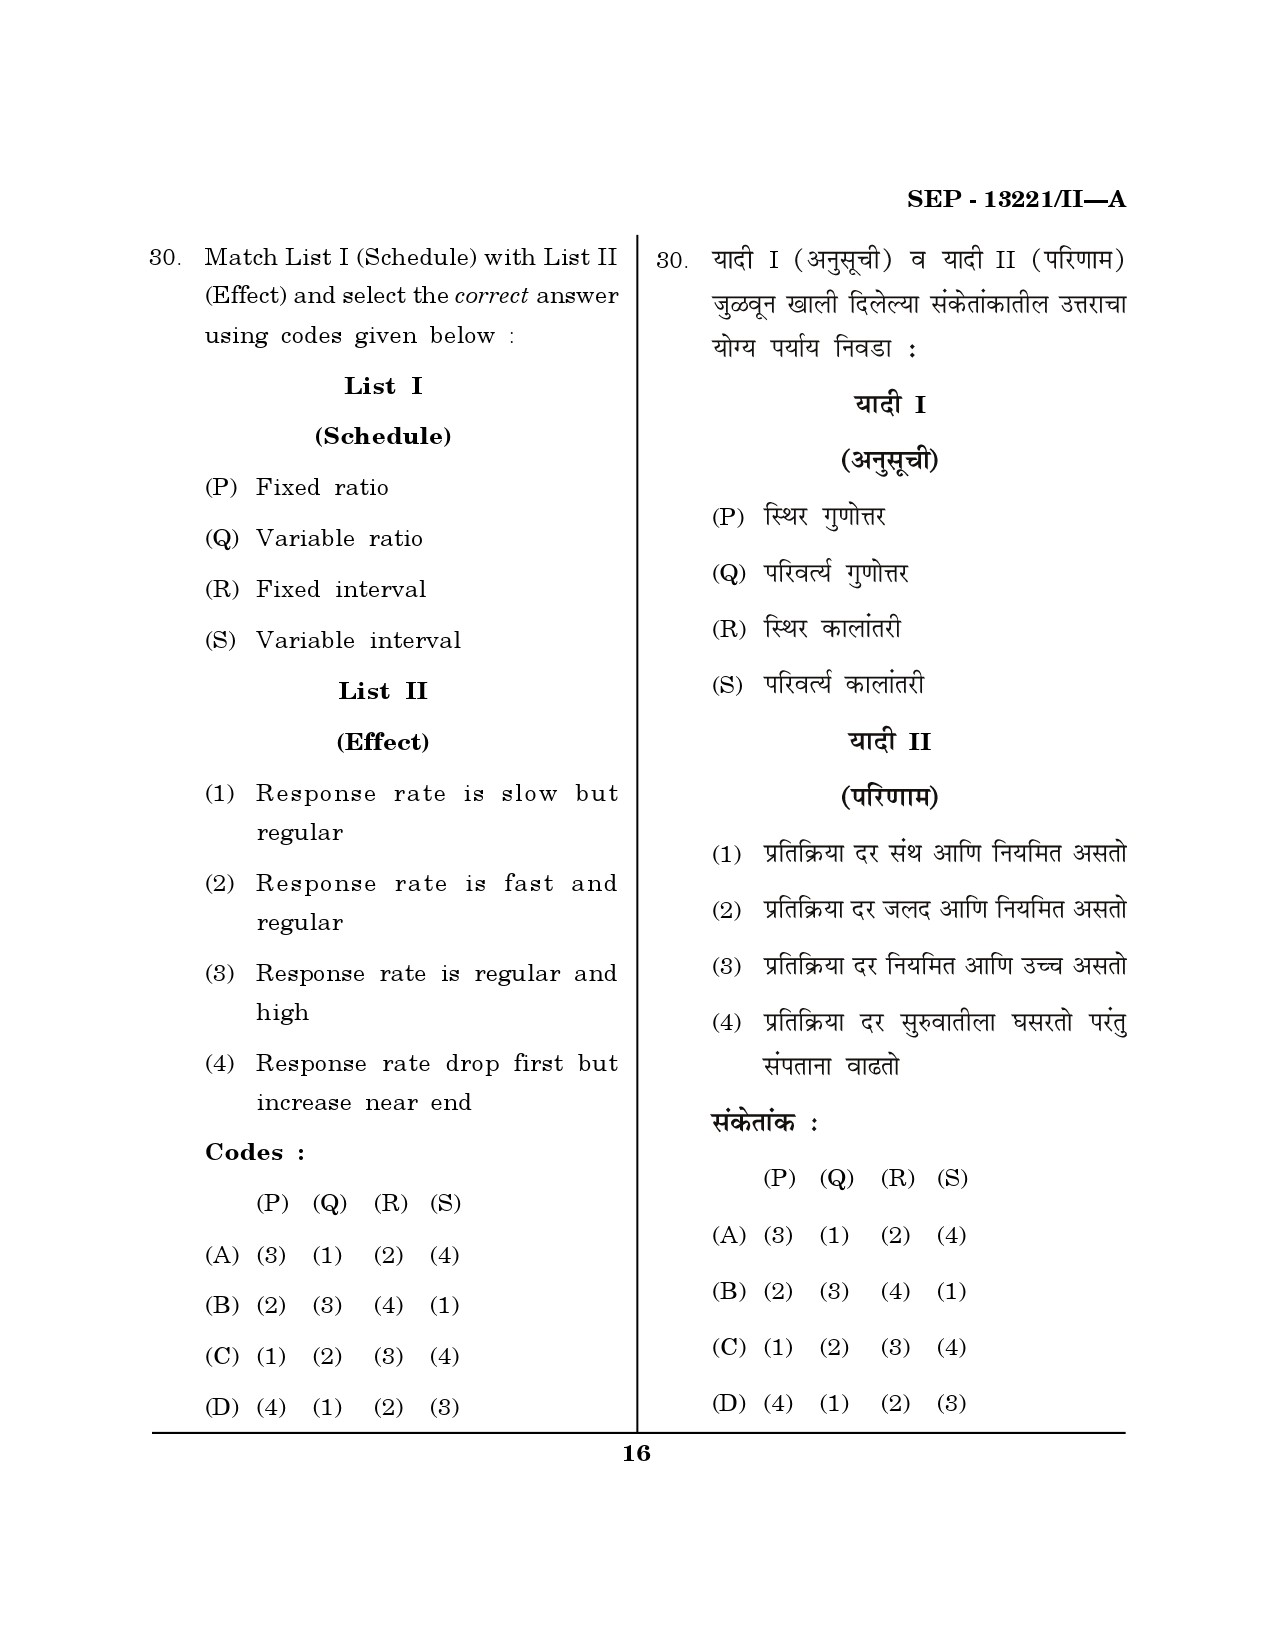 Maharashtra SET Psychology Exam Question Paper September 2021 15